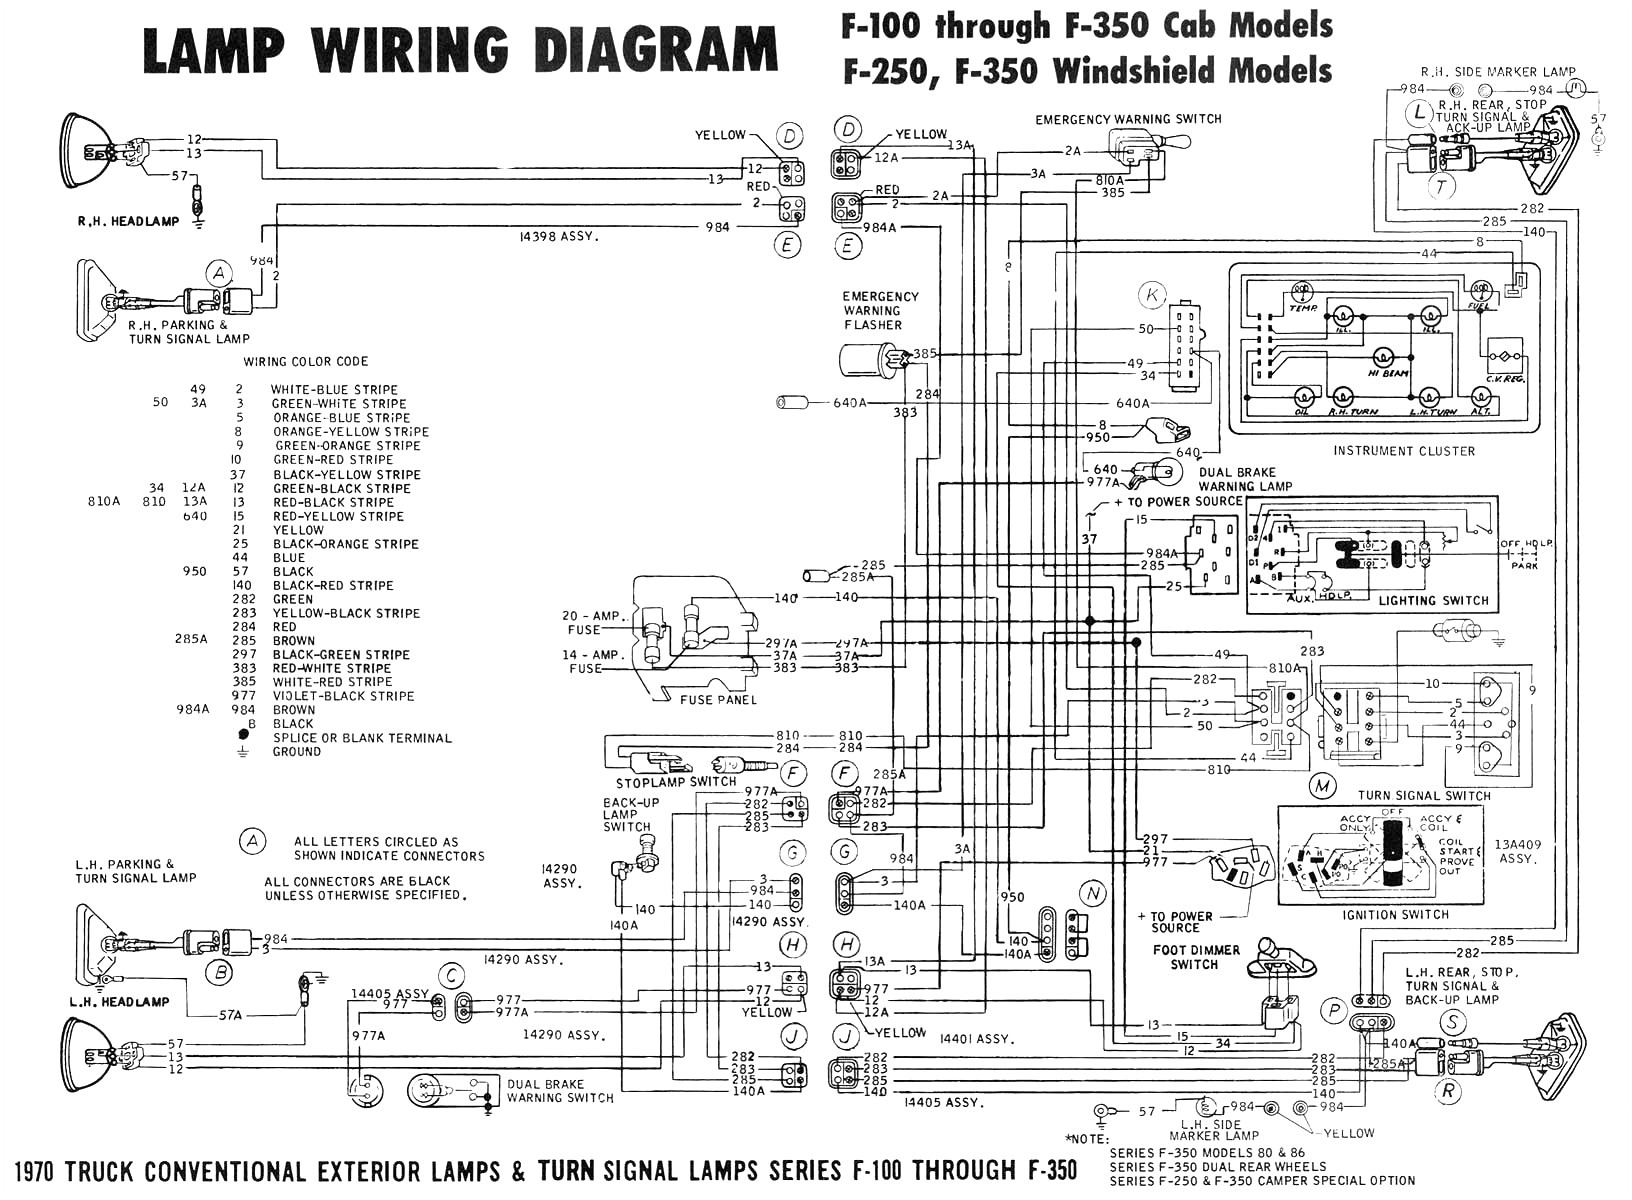 fuse box diagram 1999 international 9370 wiring diagram operations 1999 international fuse box wiring diagram